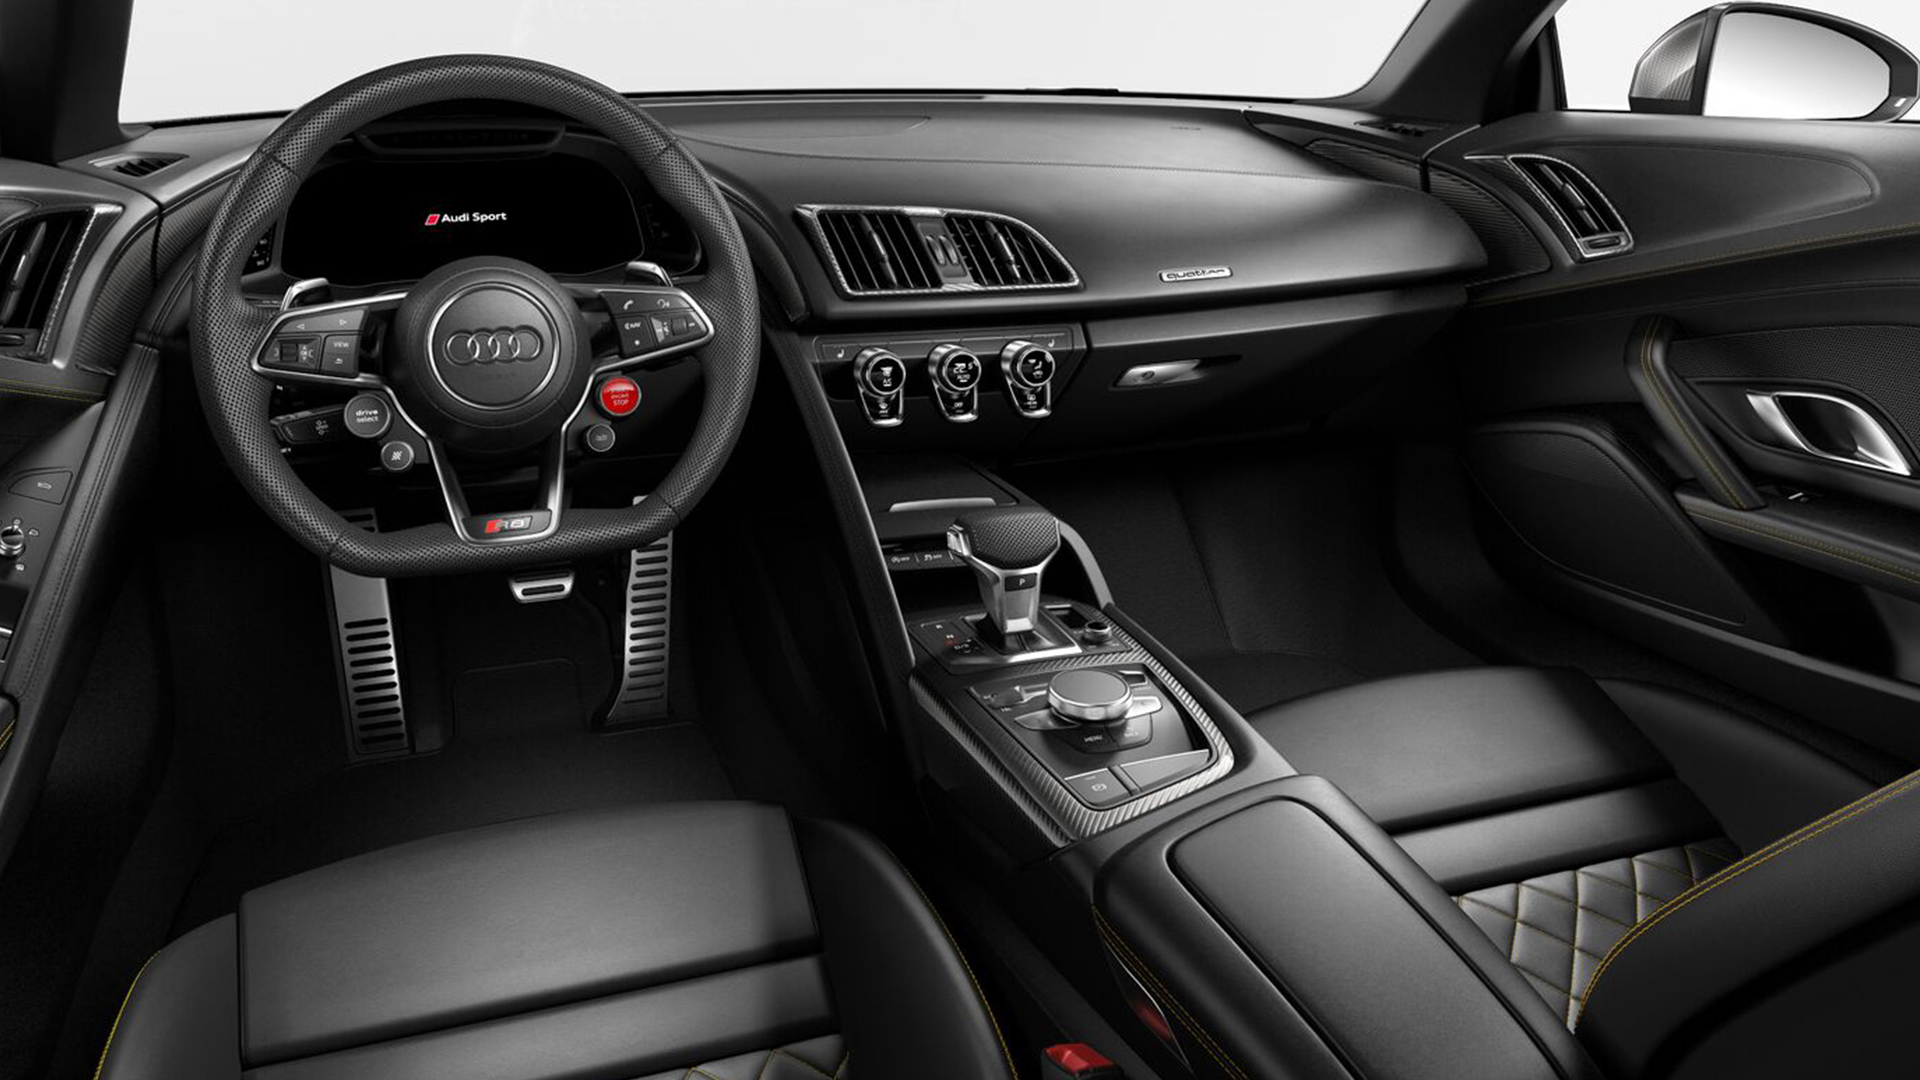 Audi virtual cockpit in the Audi R8